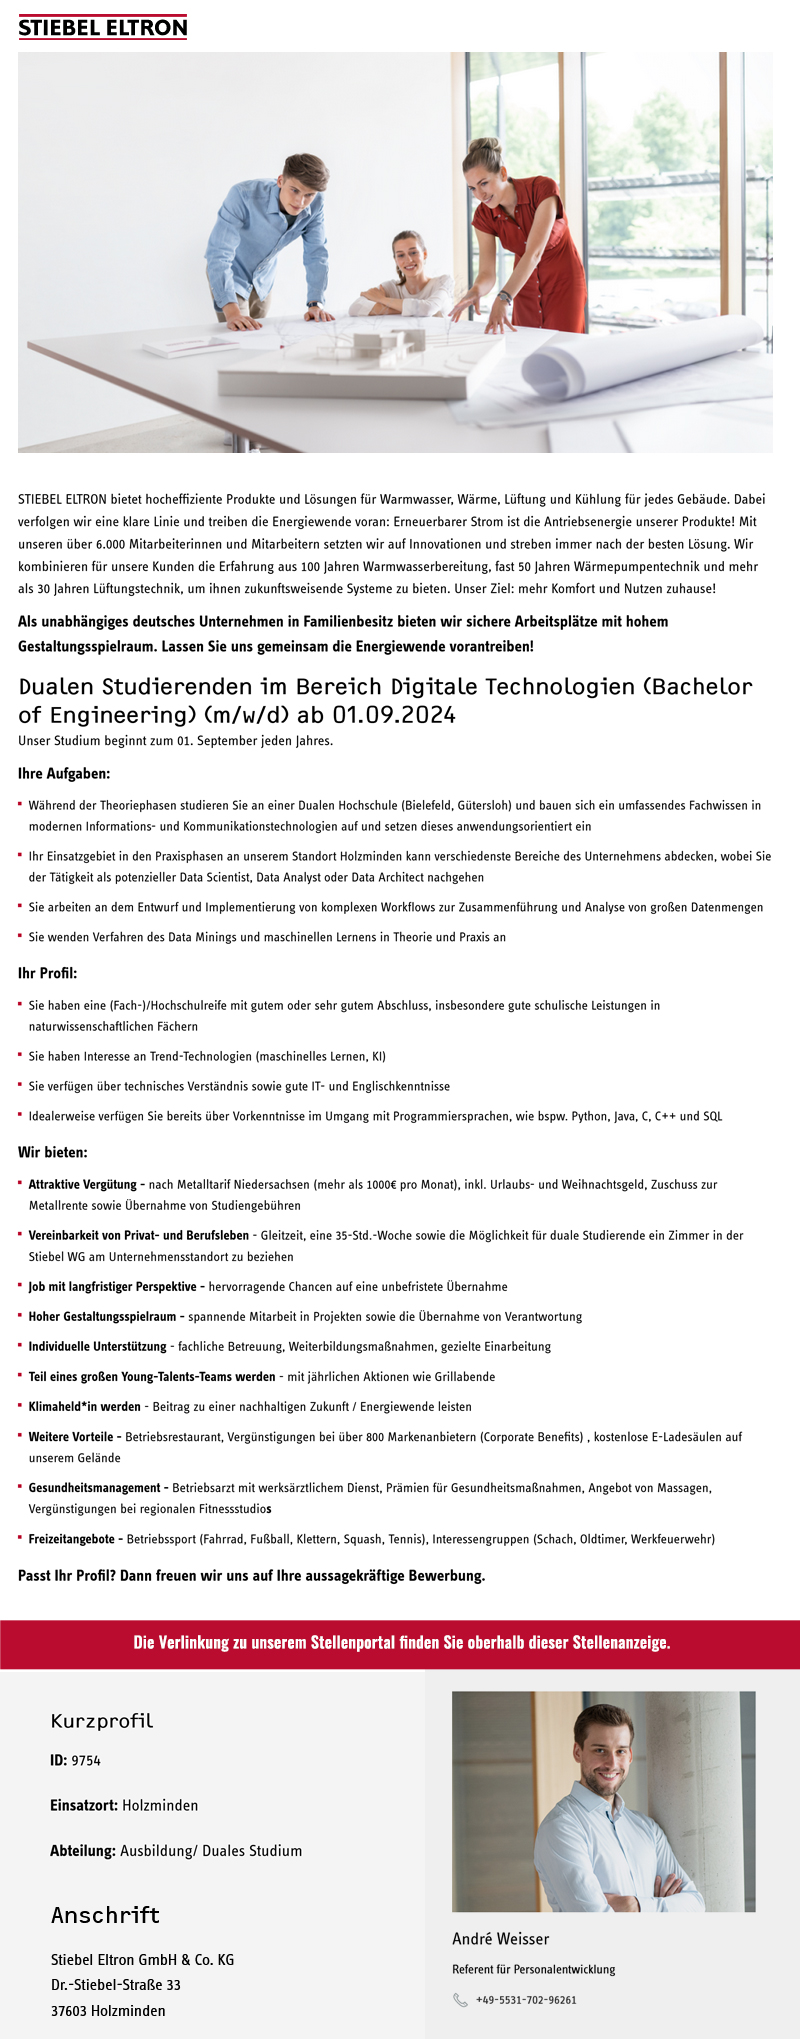 Dualen Studierenden im Bereich Digitale Technologien (Bachelor of Engineering) (m/w/d) ab 01.09.2024 - Stiebel Eltron GmbH & Co. KG